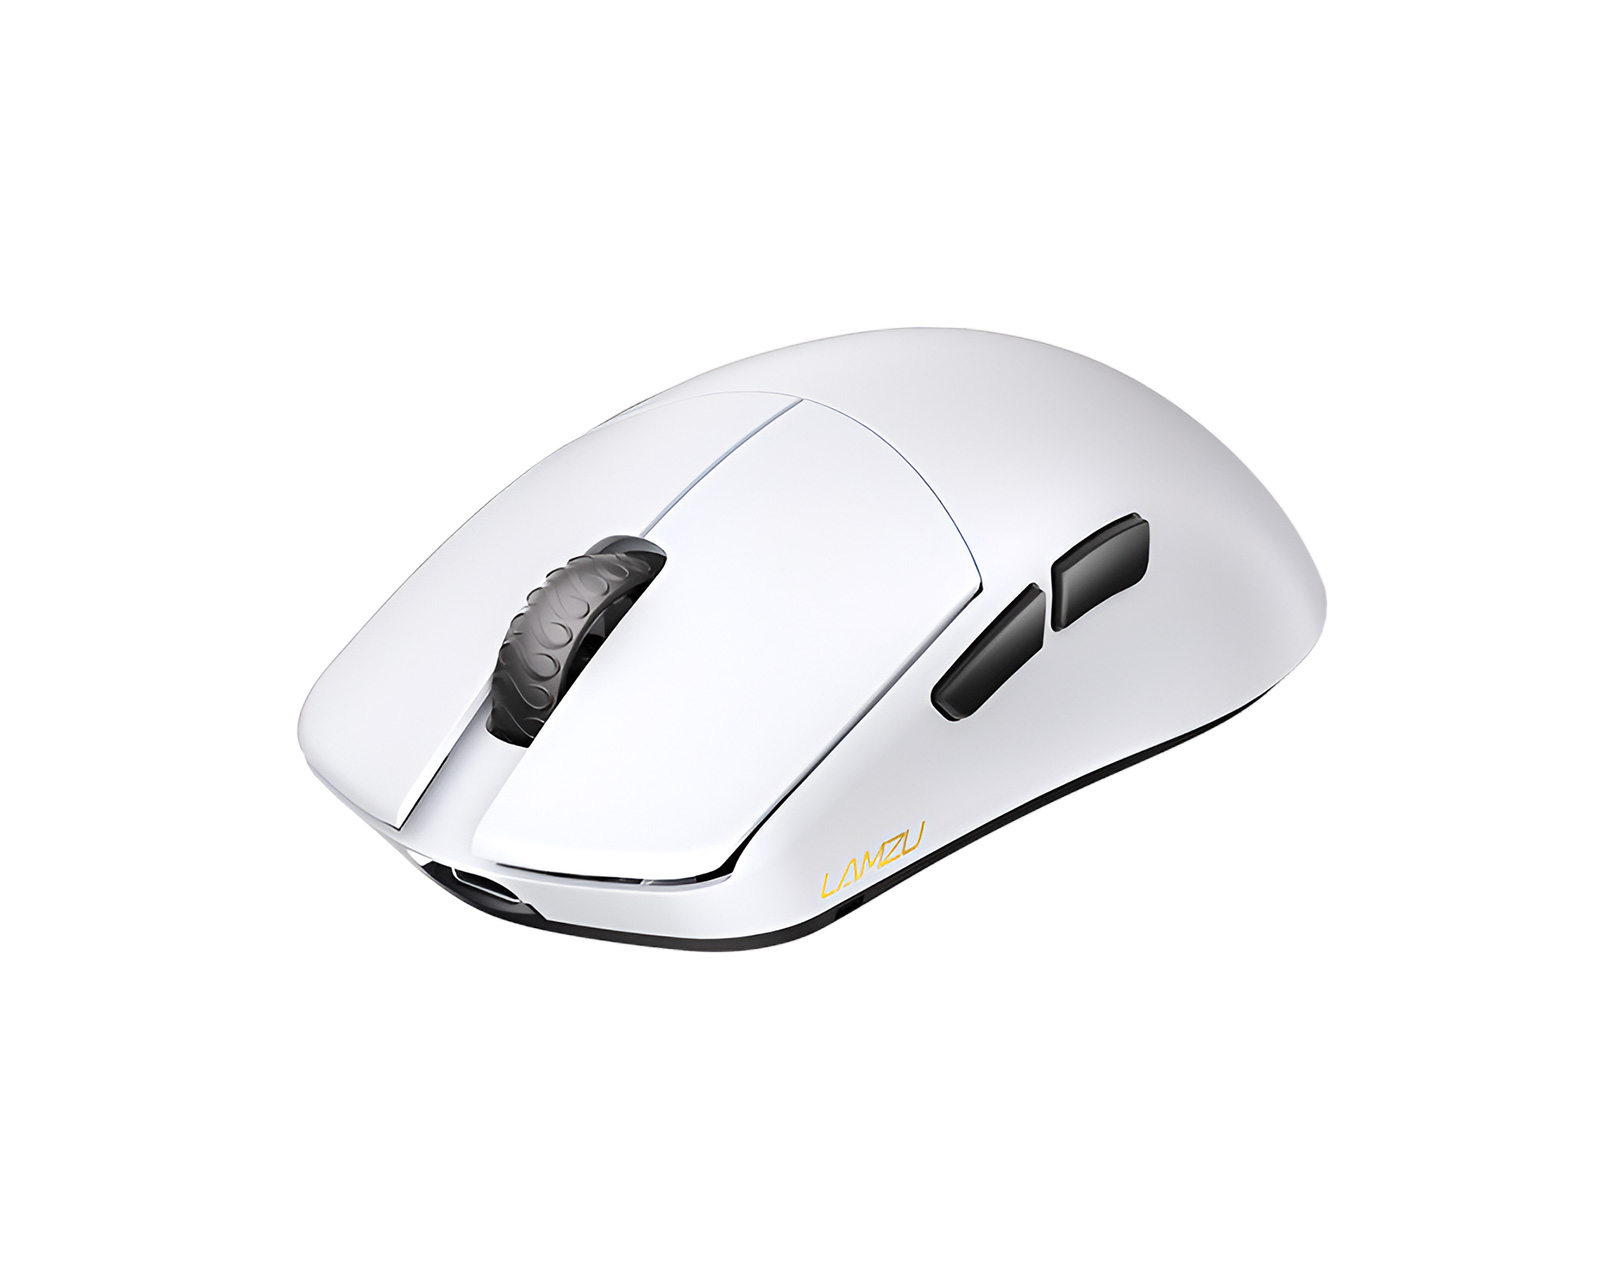 Lamzu MAYA Wireless Superlight Gaming Mouse - White - us.MaxGaming.com